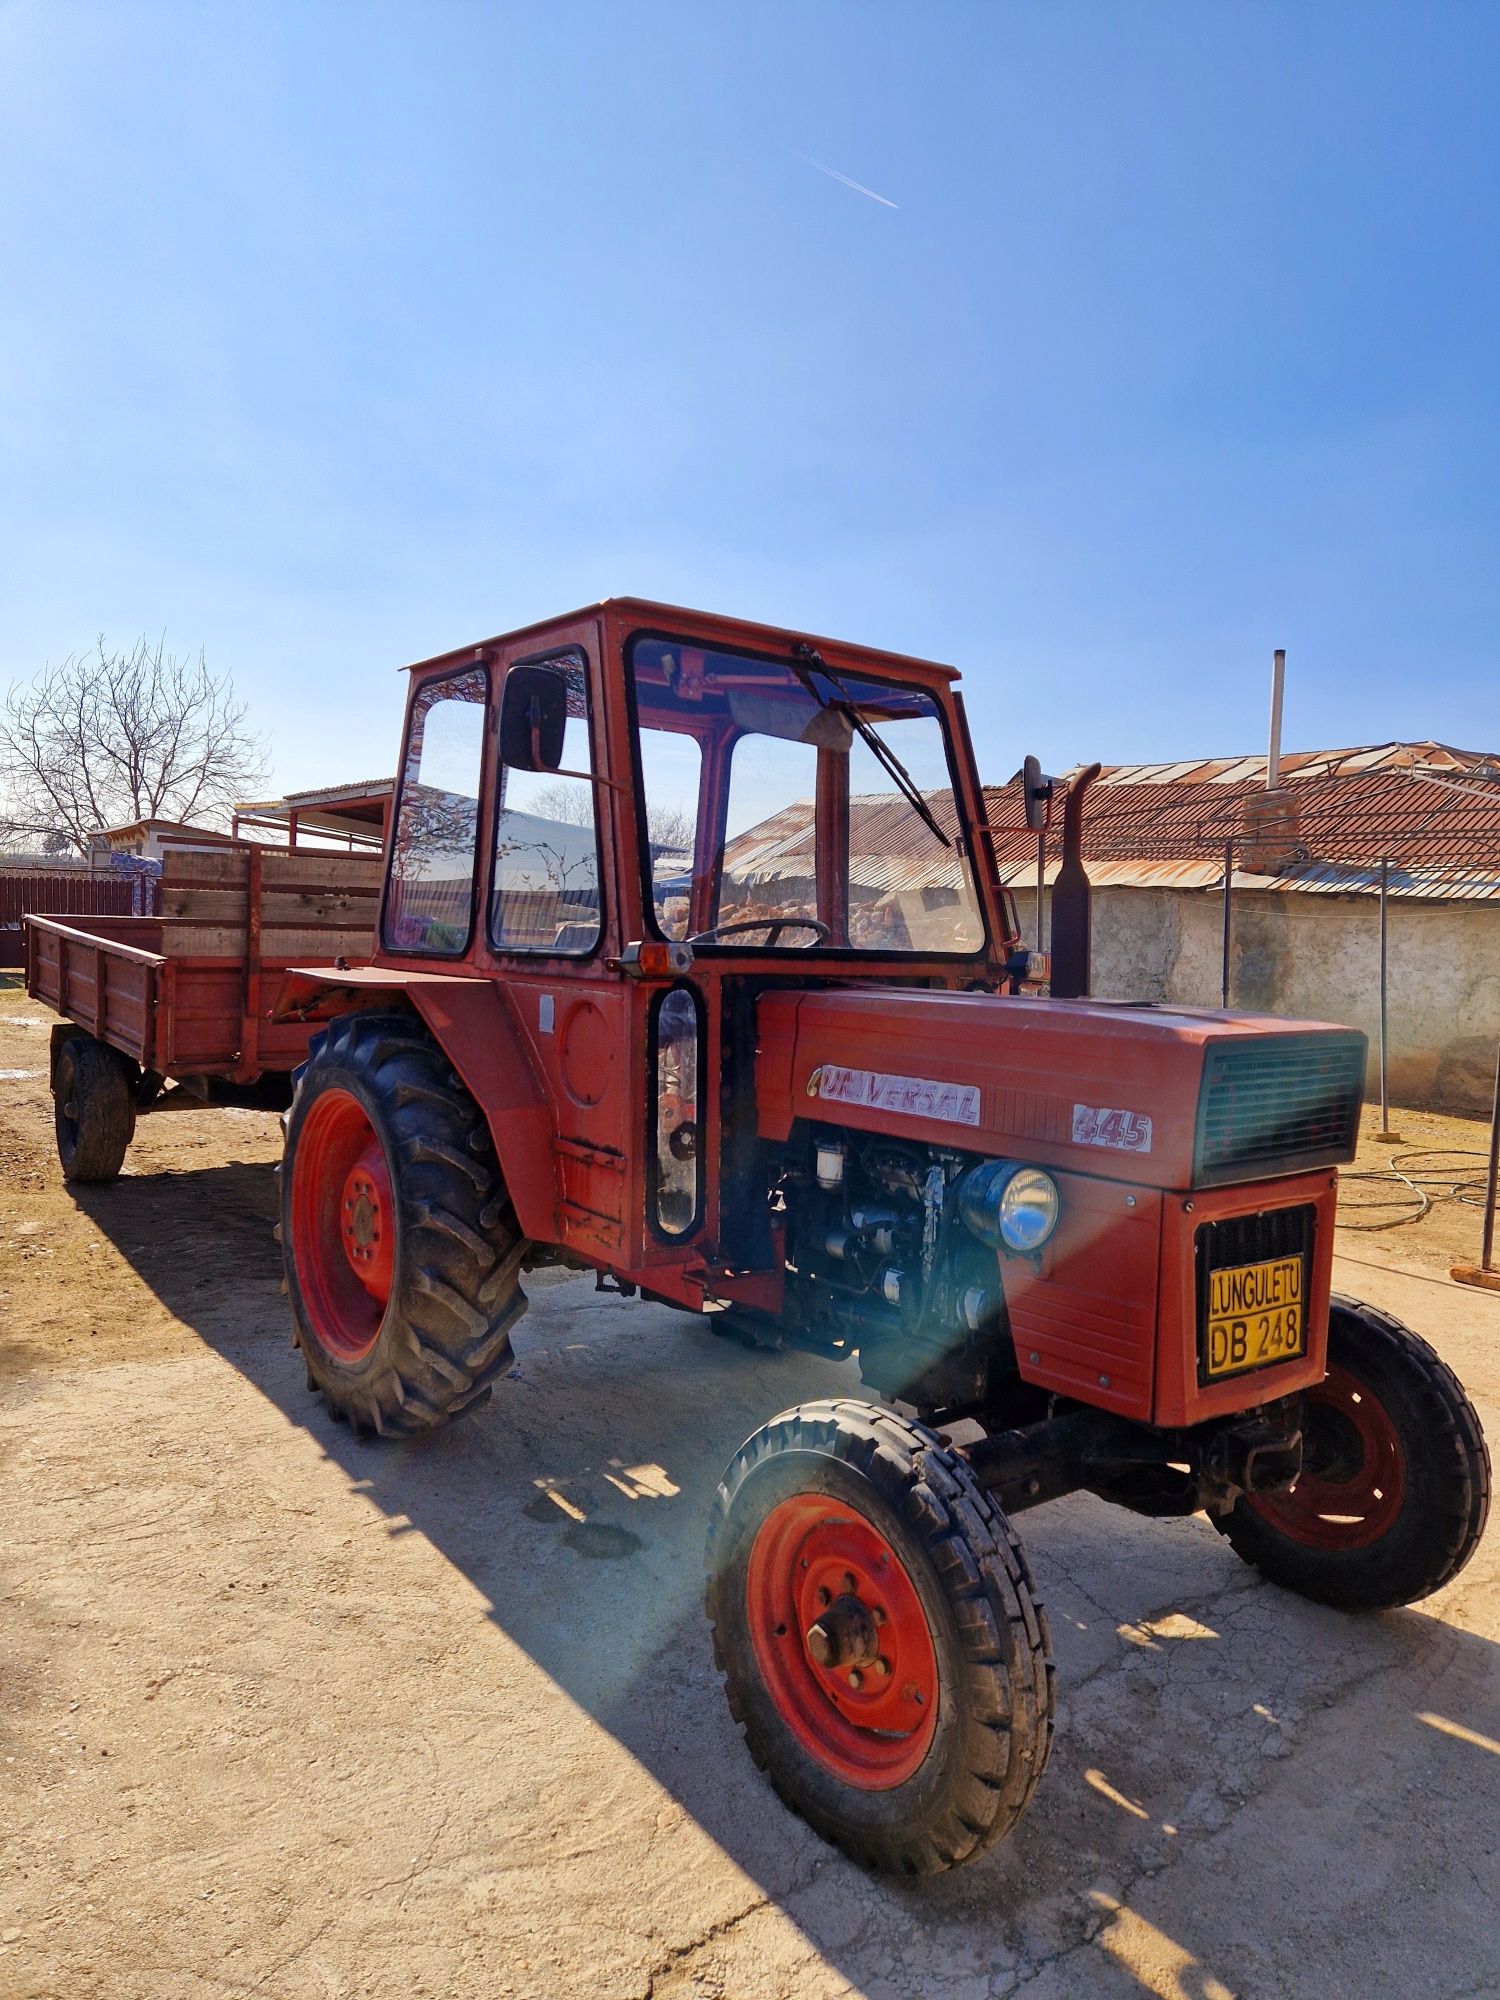 Tractor UTB  445